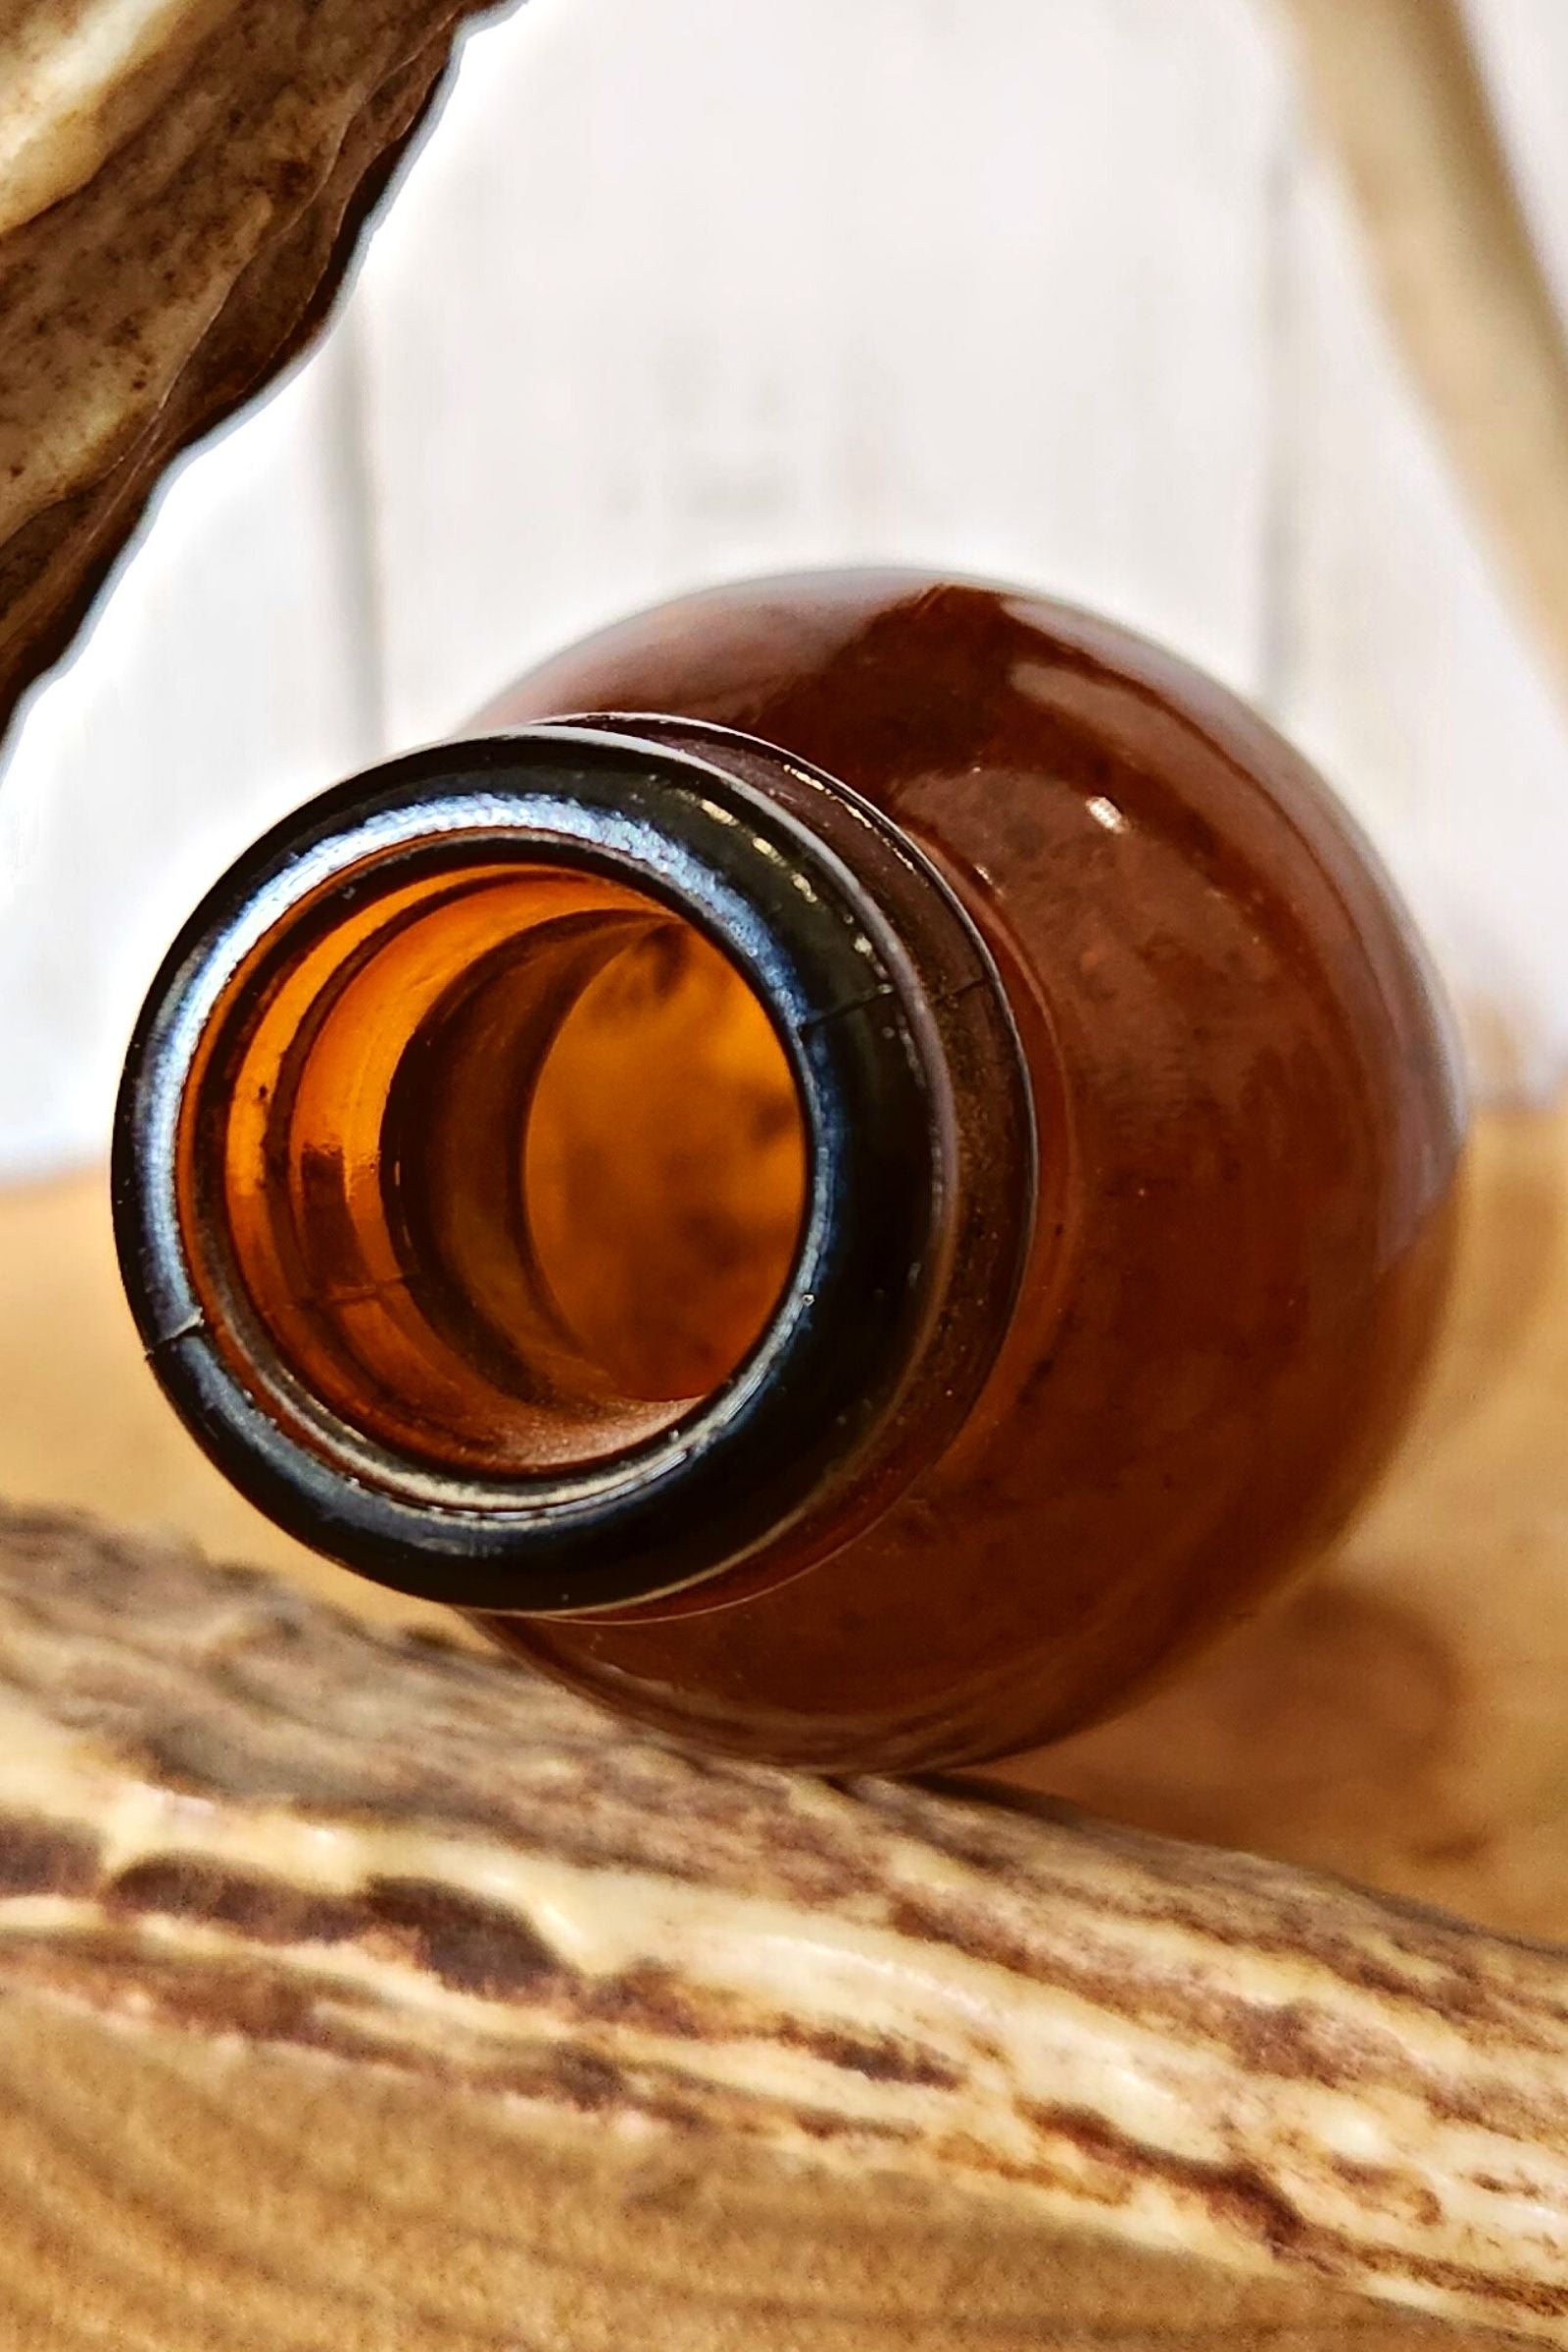 Vintage Small Brown Bottle